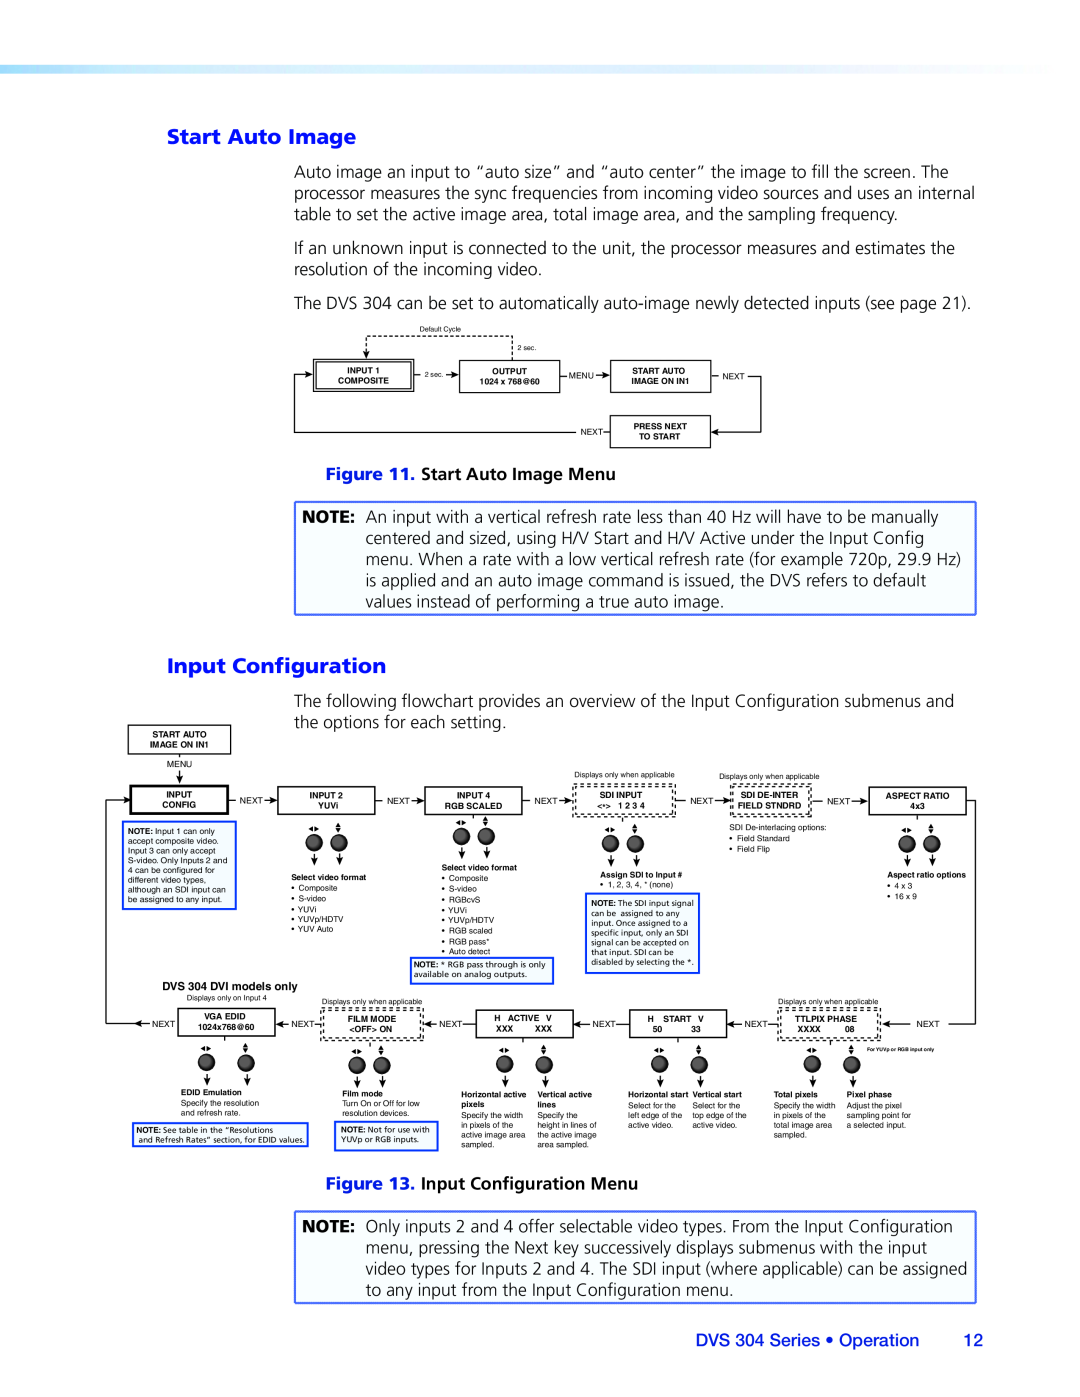 Extron electronic manual Start Auto Image Menu, Input Configuration Menu, DVS 304 Series • Operation 